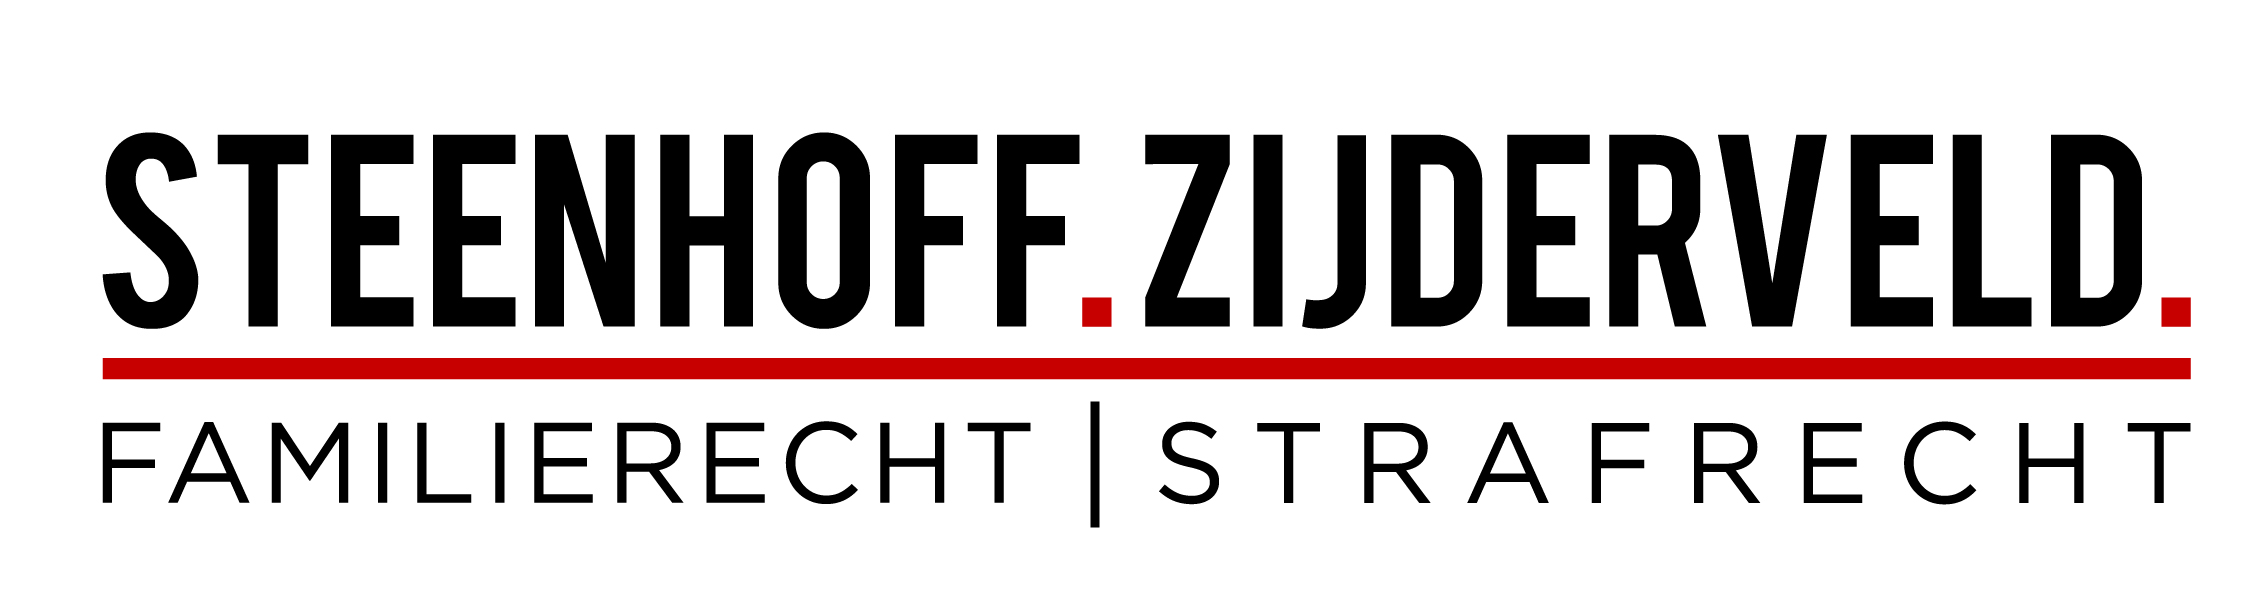 Steenhoff & Zijderveld